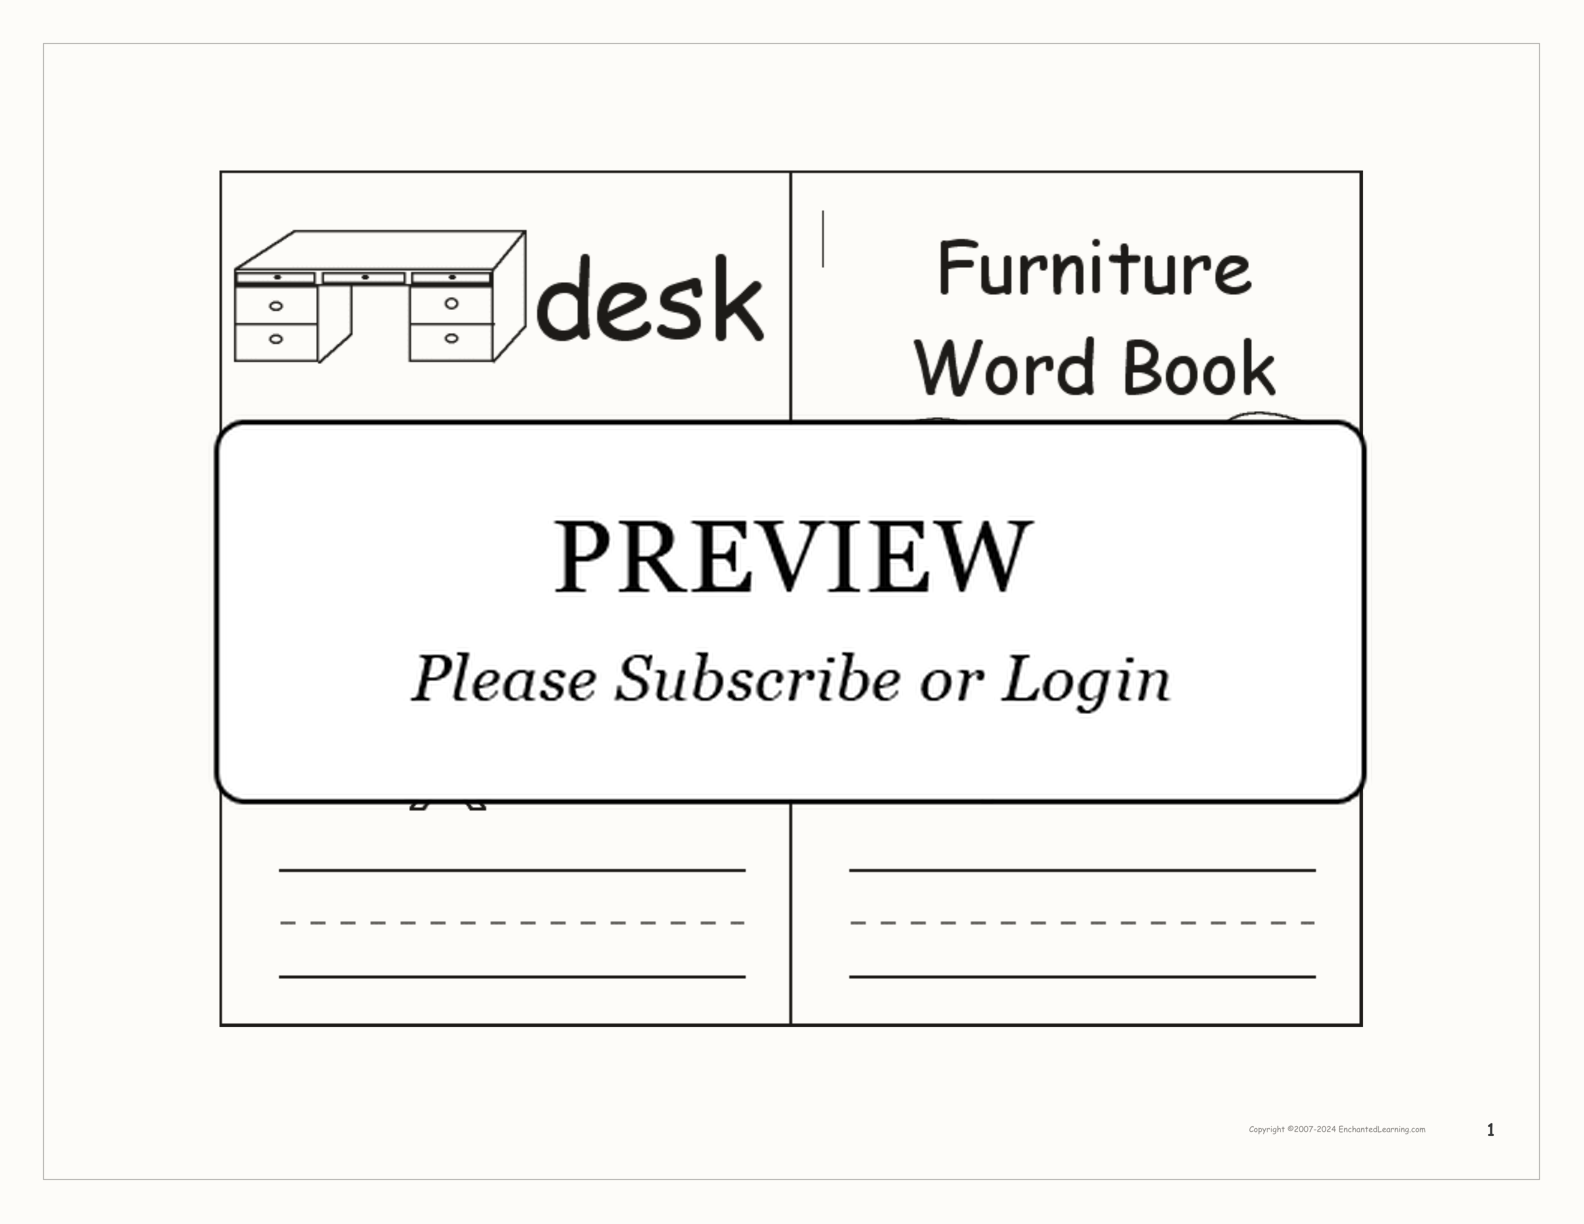 Furniture Word Mini Book interactive printout page 1